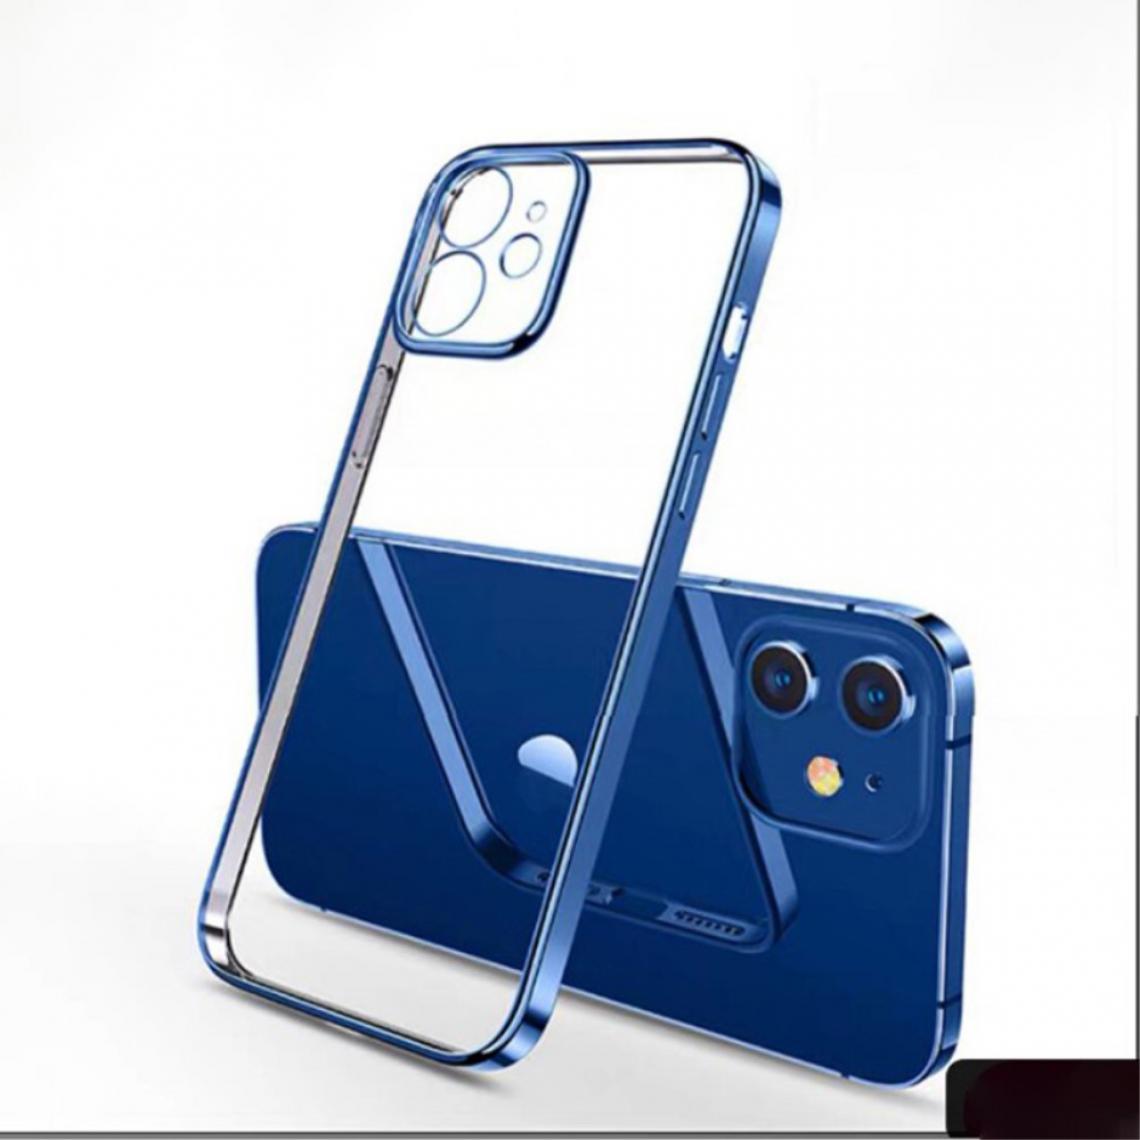 Sulada - Coque en TPU cadre de galvanoplastie ultra fin clair bleu pour votre Apple iPhone 12 Pro Max - Coque, étui smartphone